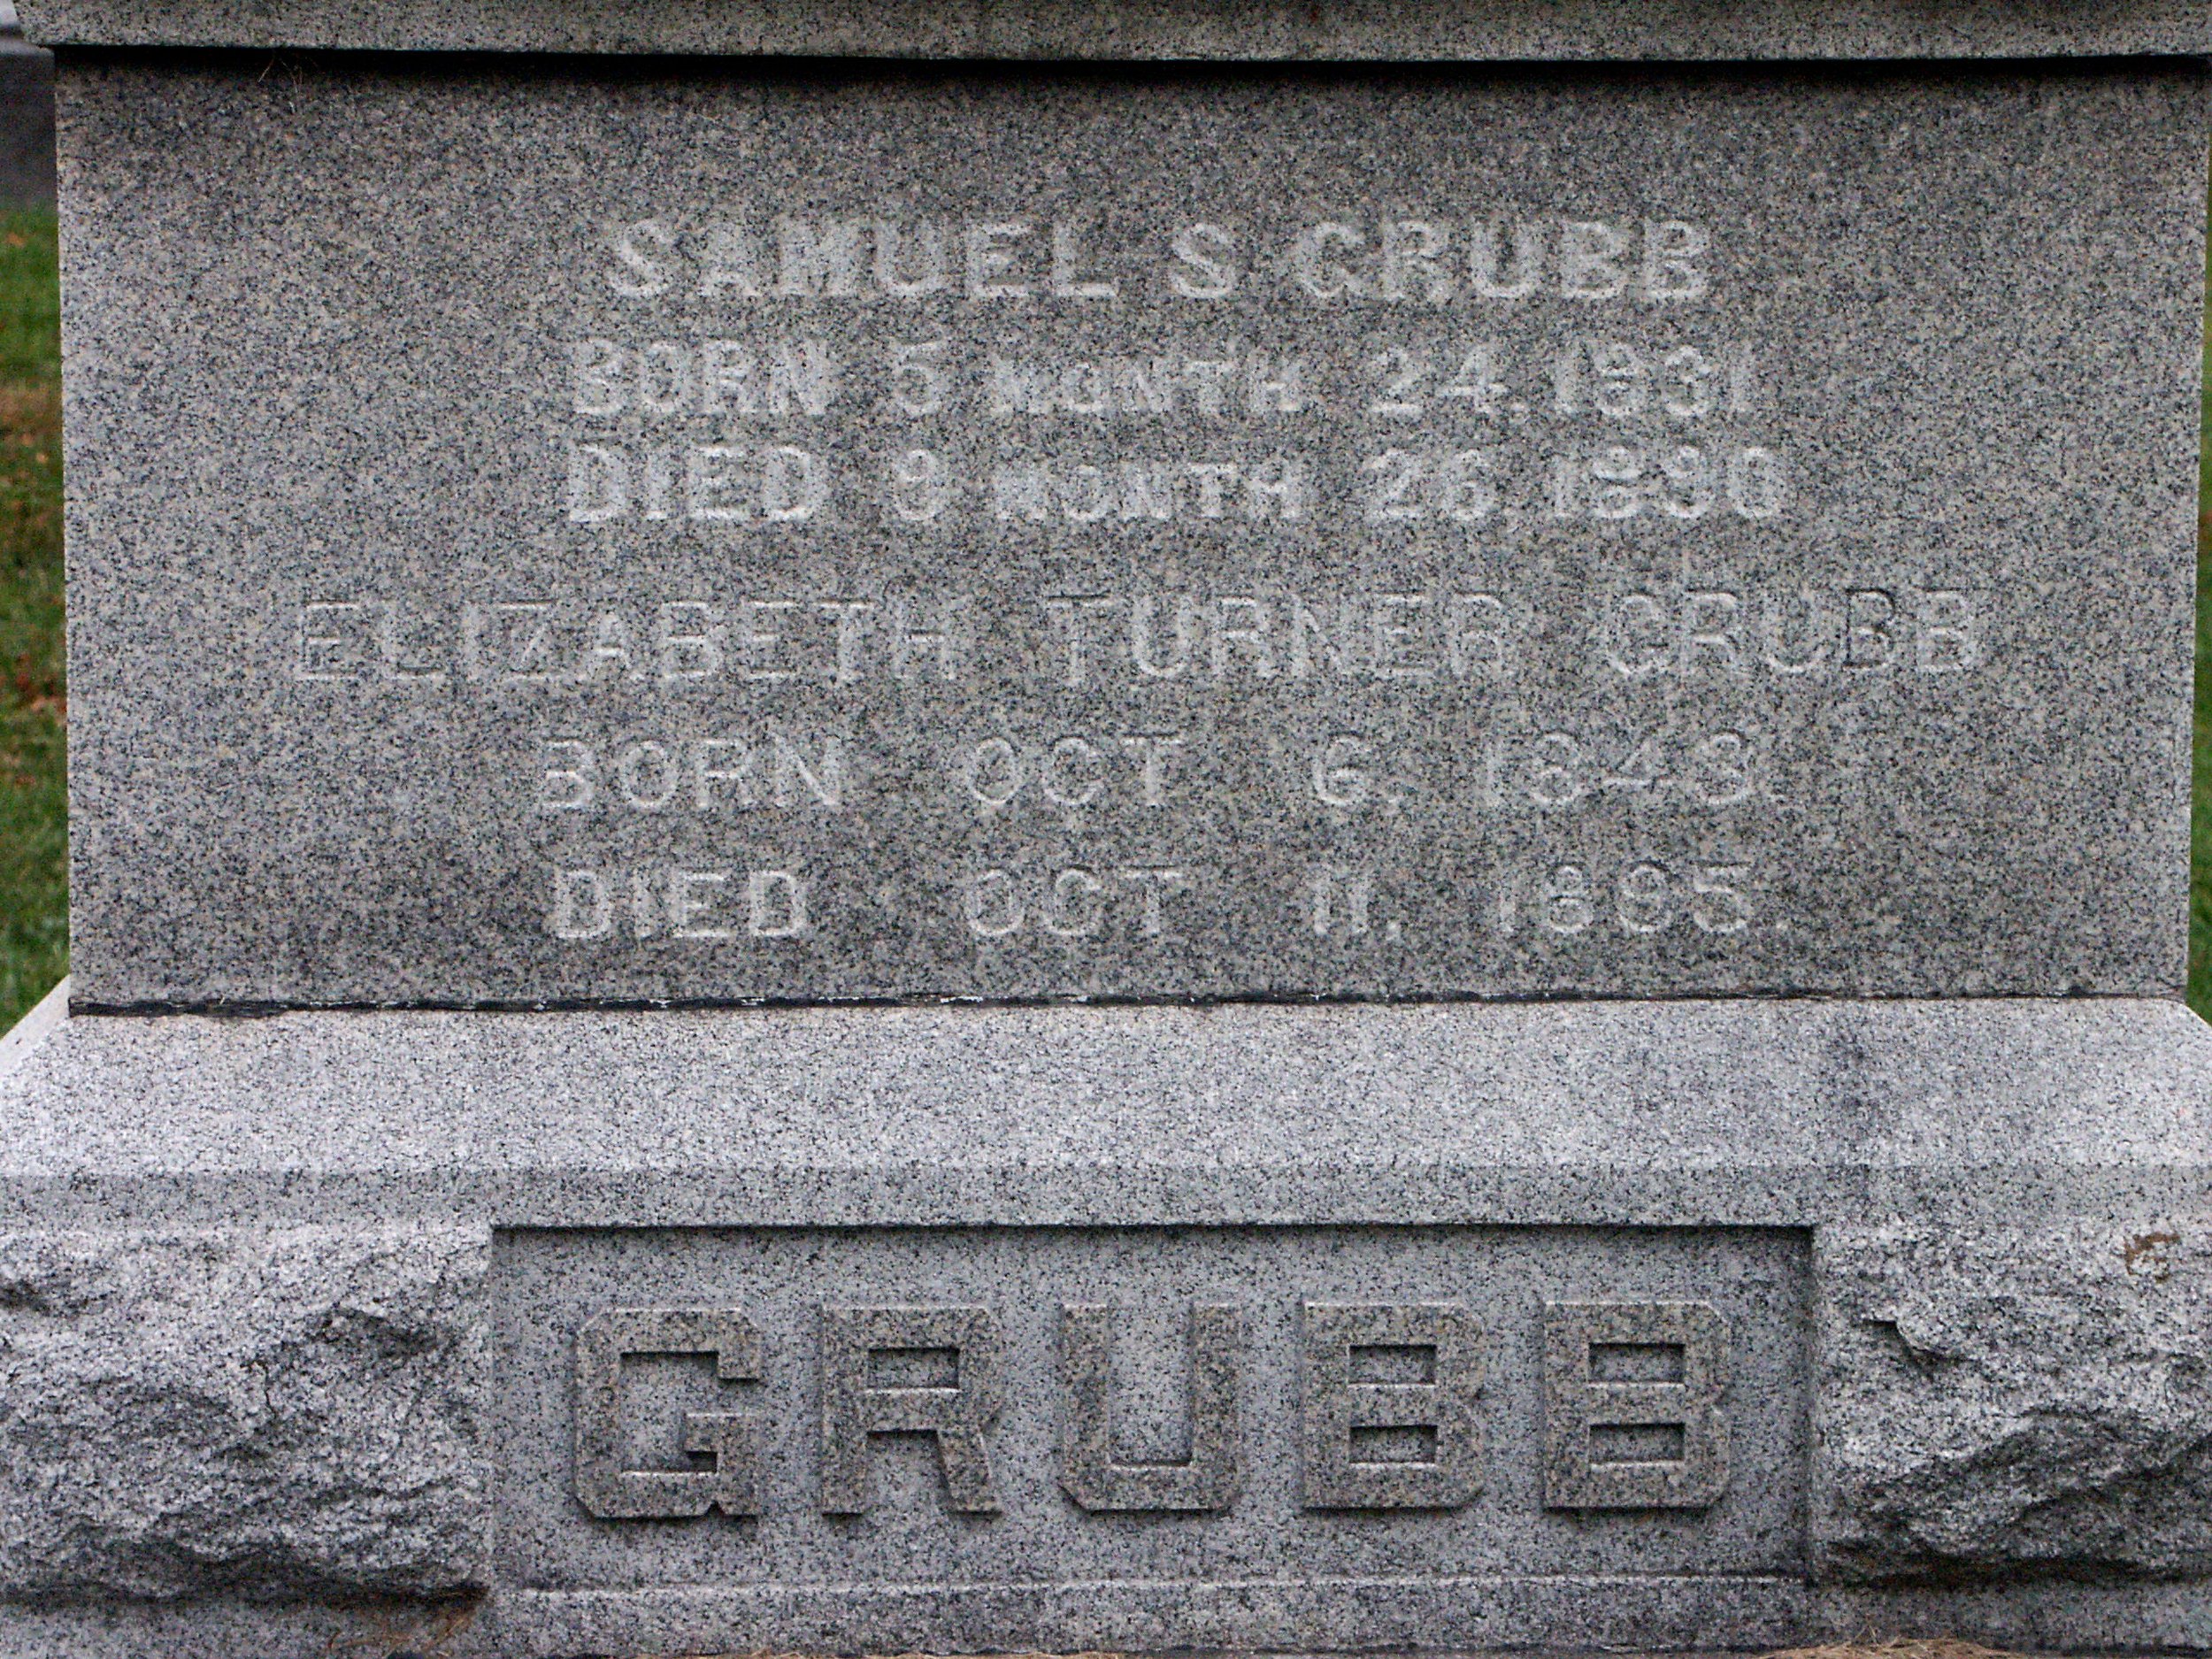 Grubb, Samuel, 2